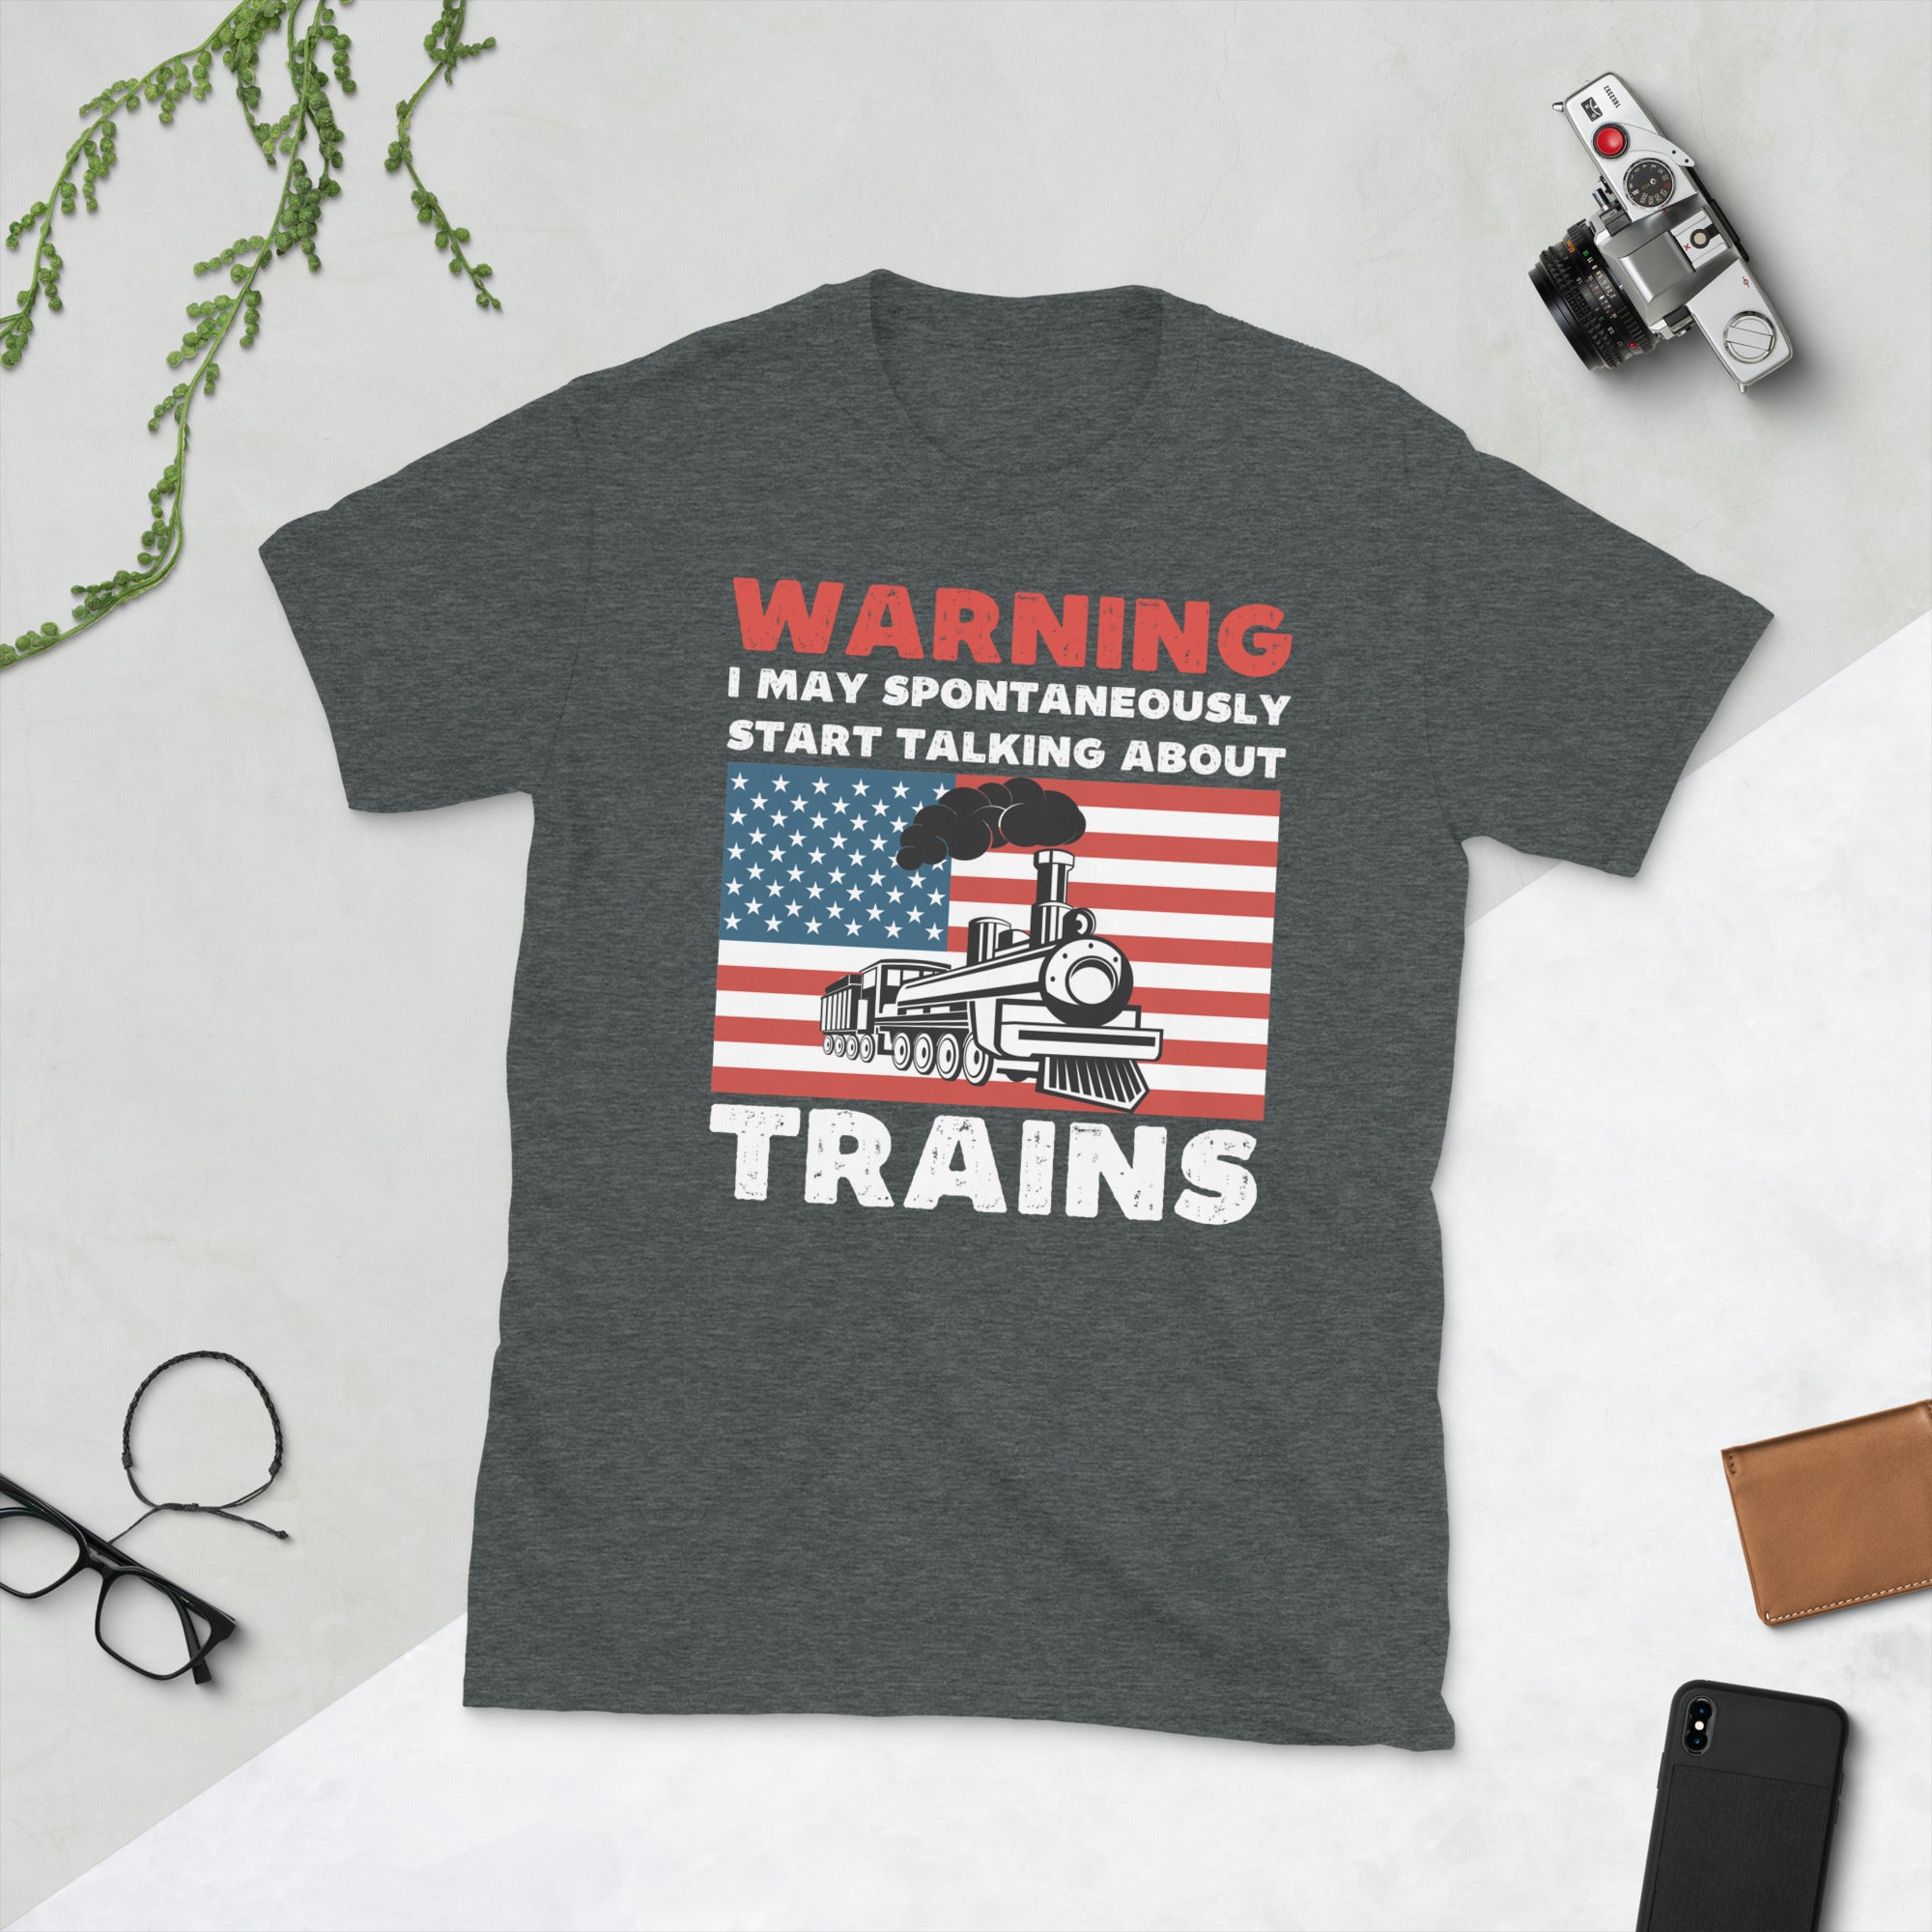 Achtung: Kann anfangen, über Züge zu sprechen T-Shirt, Zugführer Shirt, Zug Modell Lokomotive Geschenke, Lustiges Eisenbahn T-Shirt, Vintage Zug T-Shirt